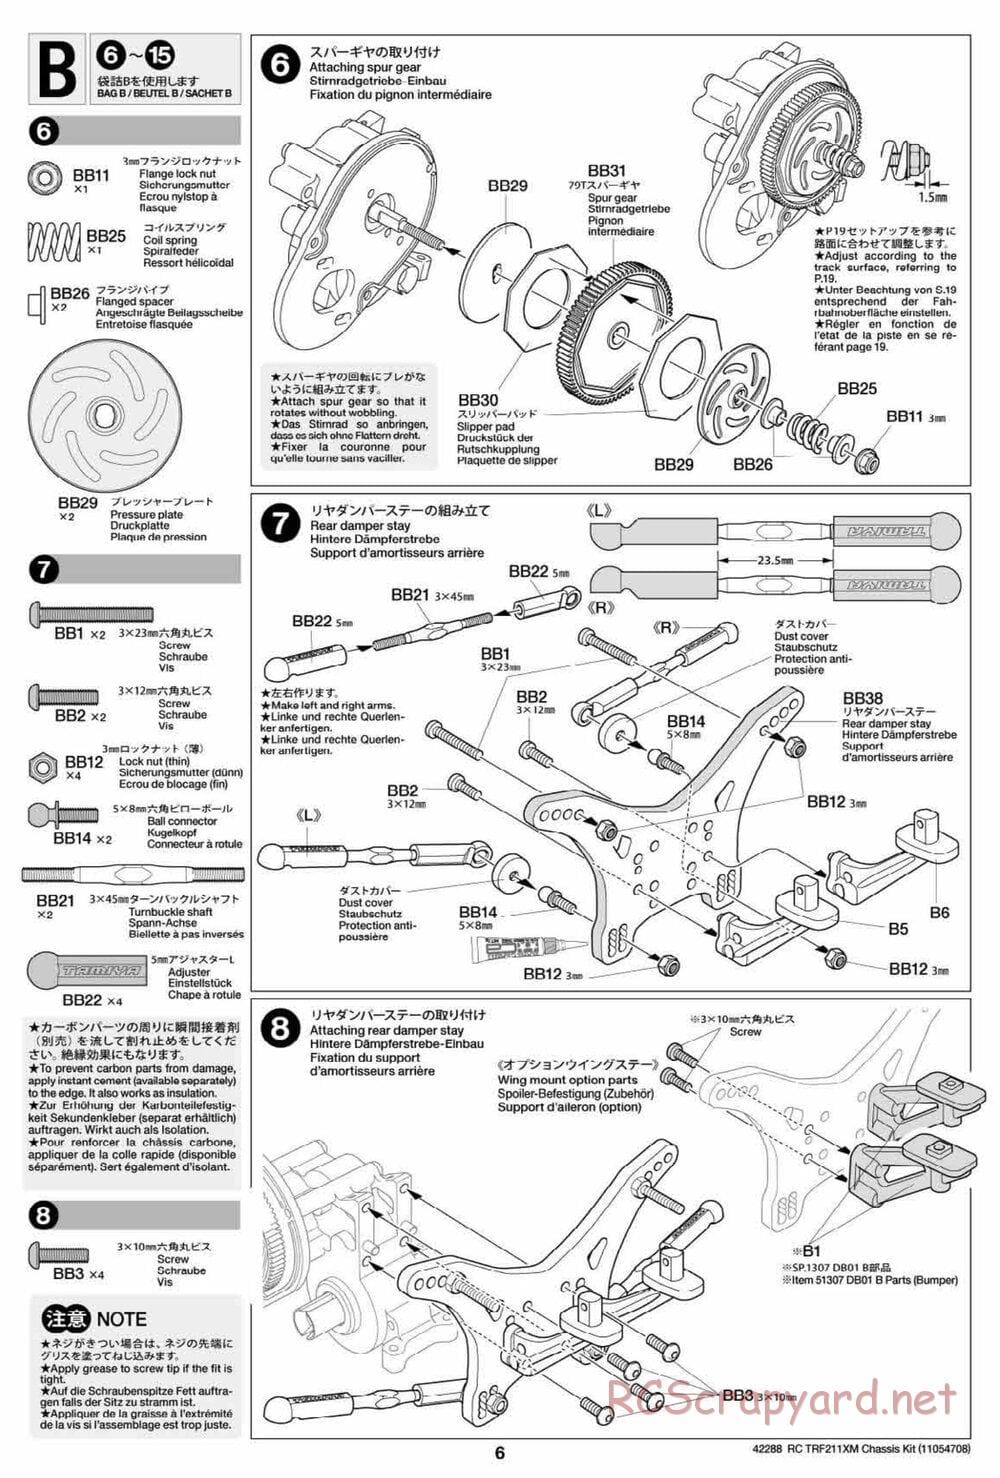 Tamiya - TRF211XM Chassis - Manual - Page 6